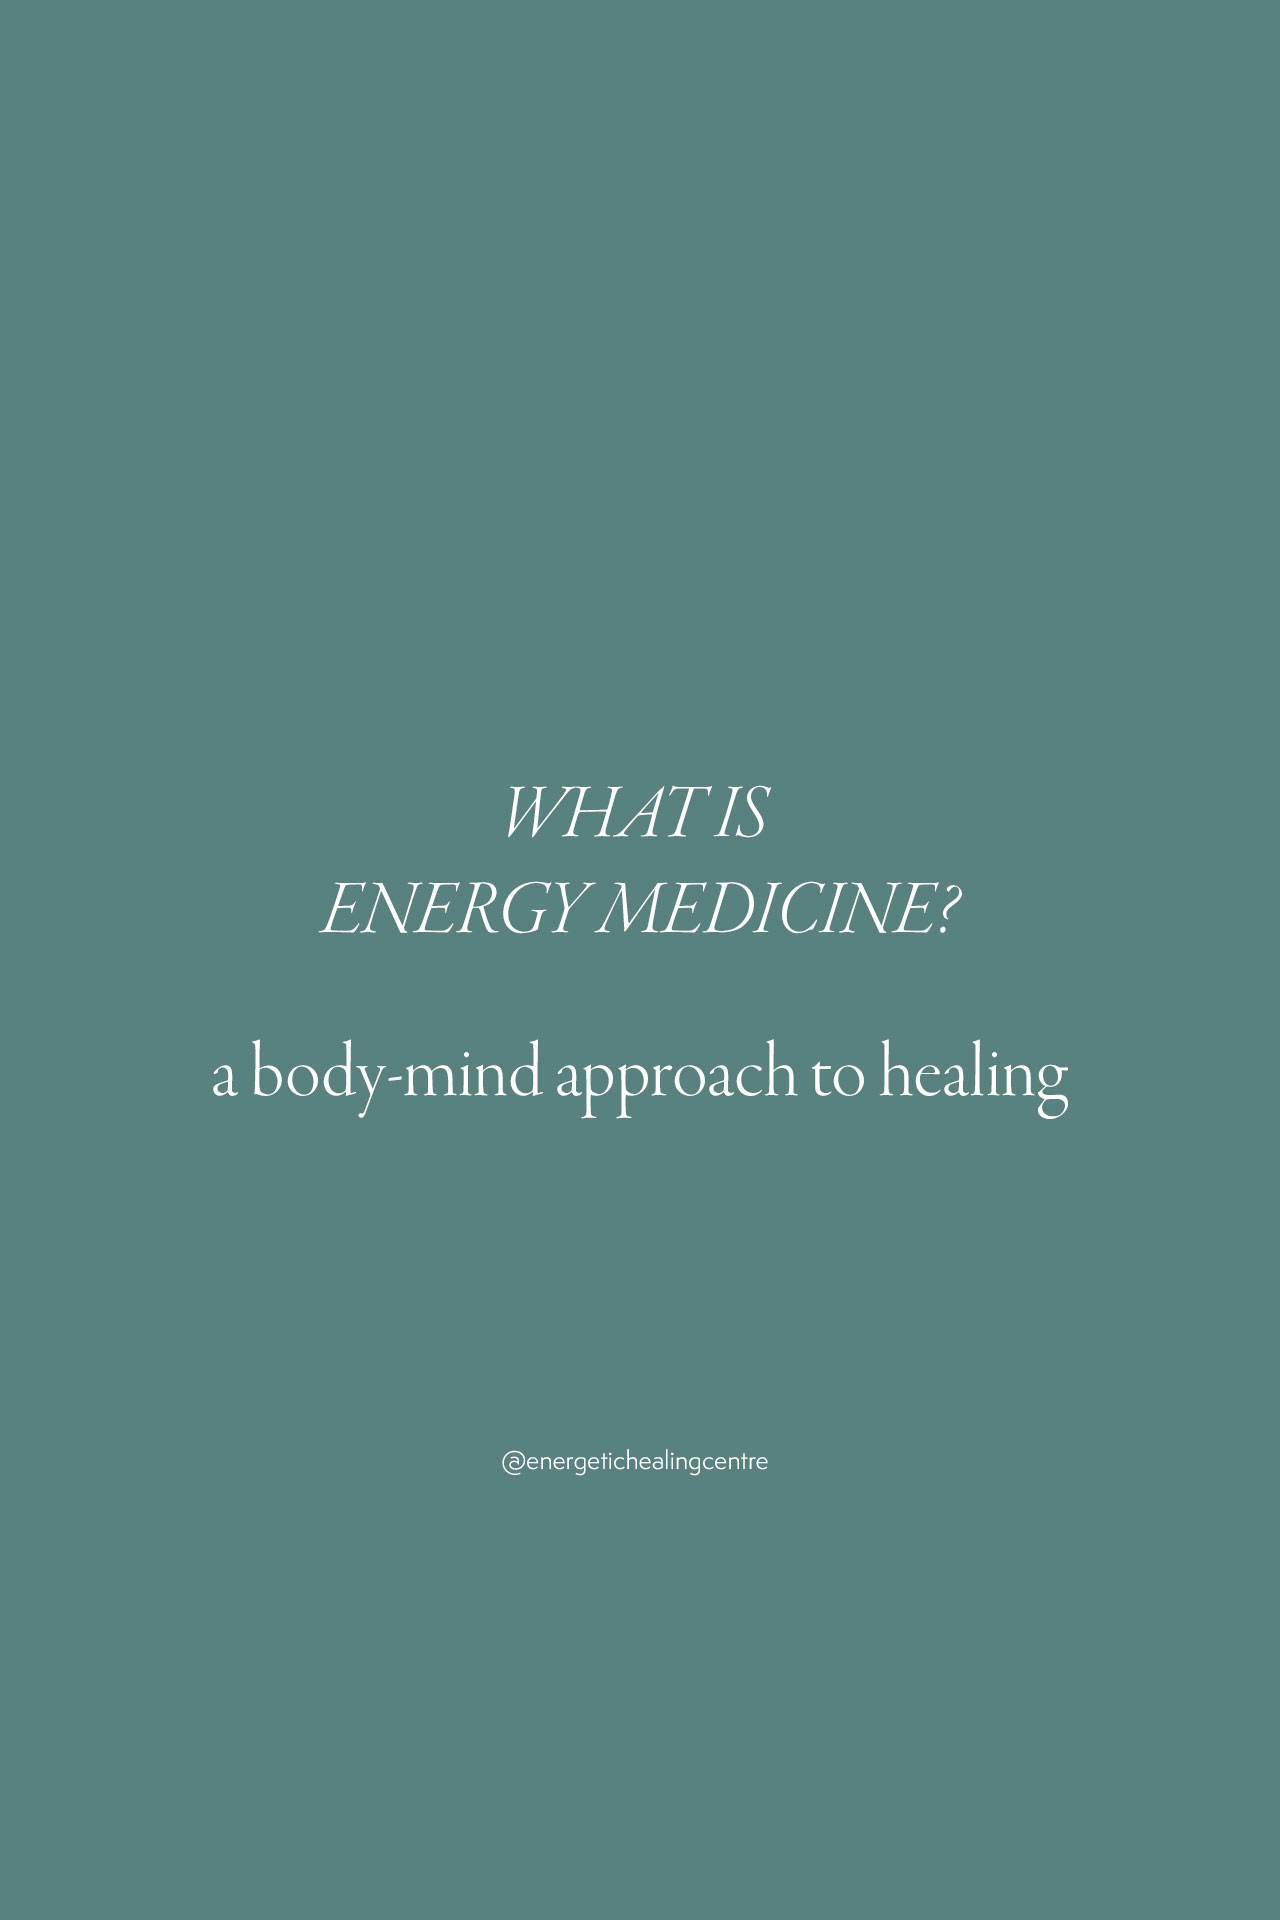 What is Energy Medicine?